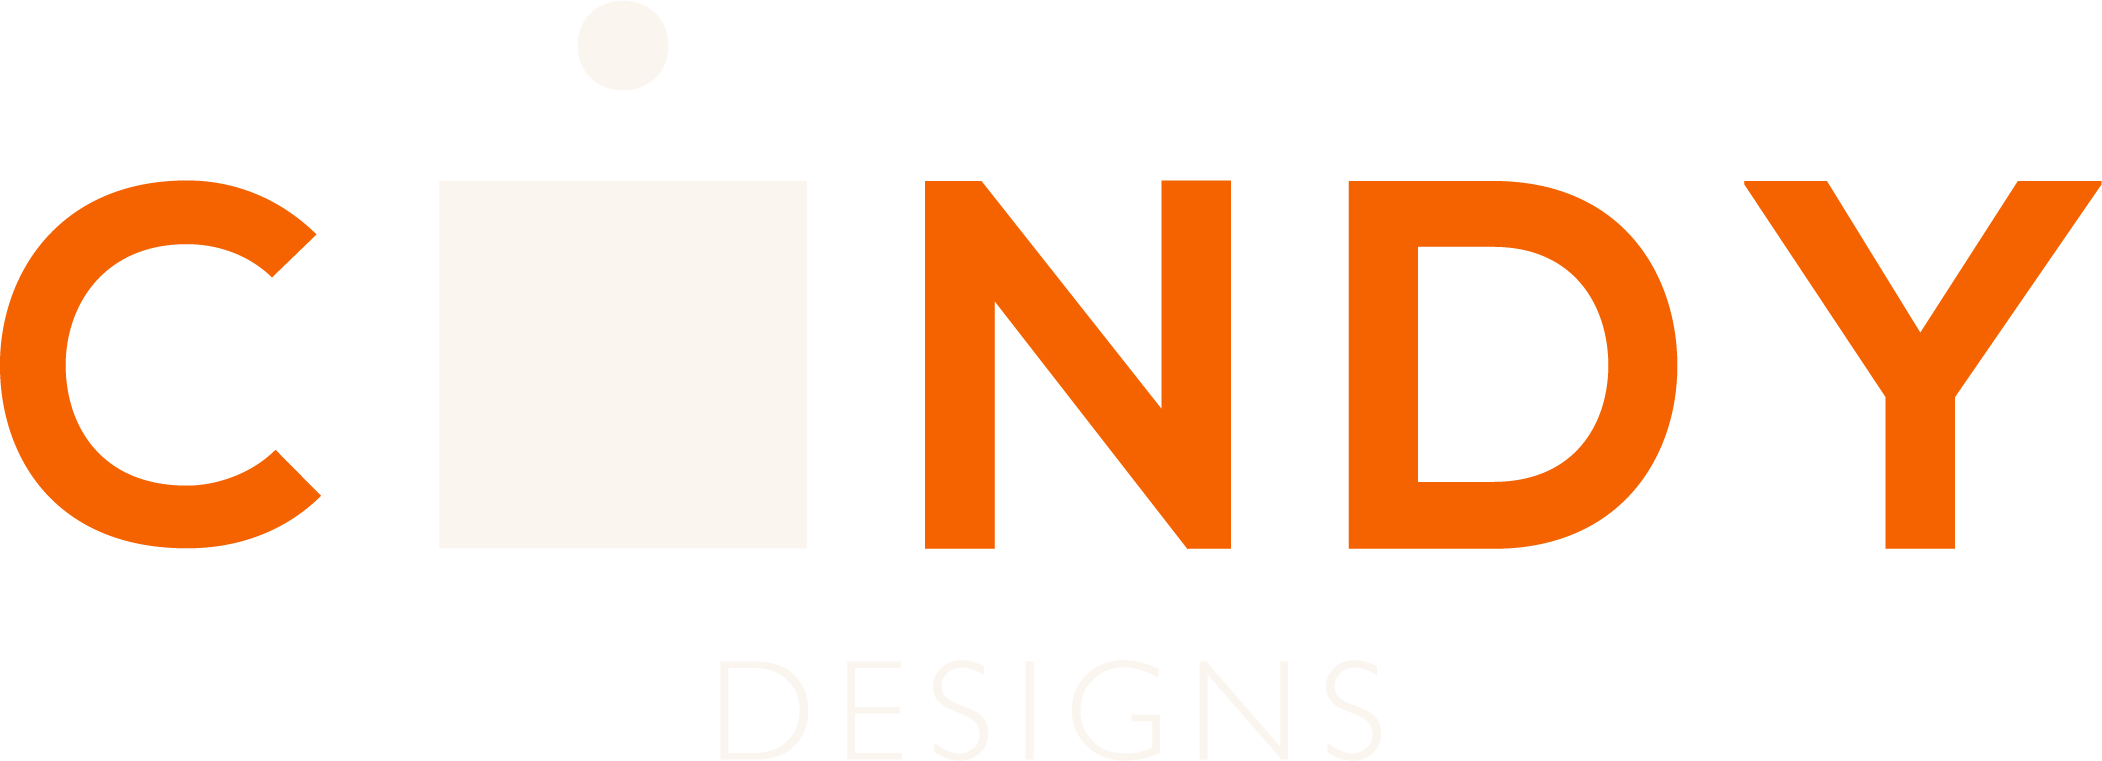 CNDY Designs